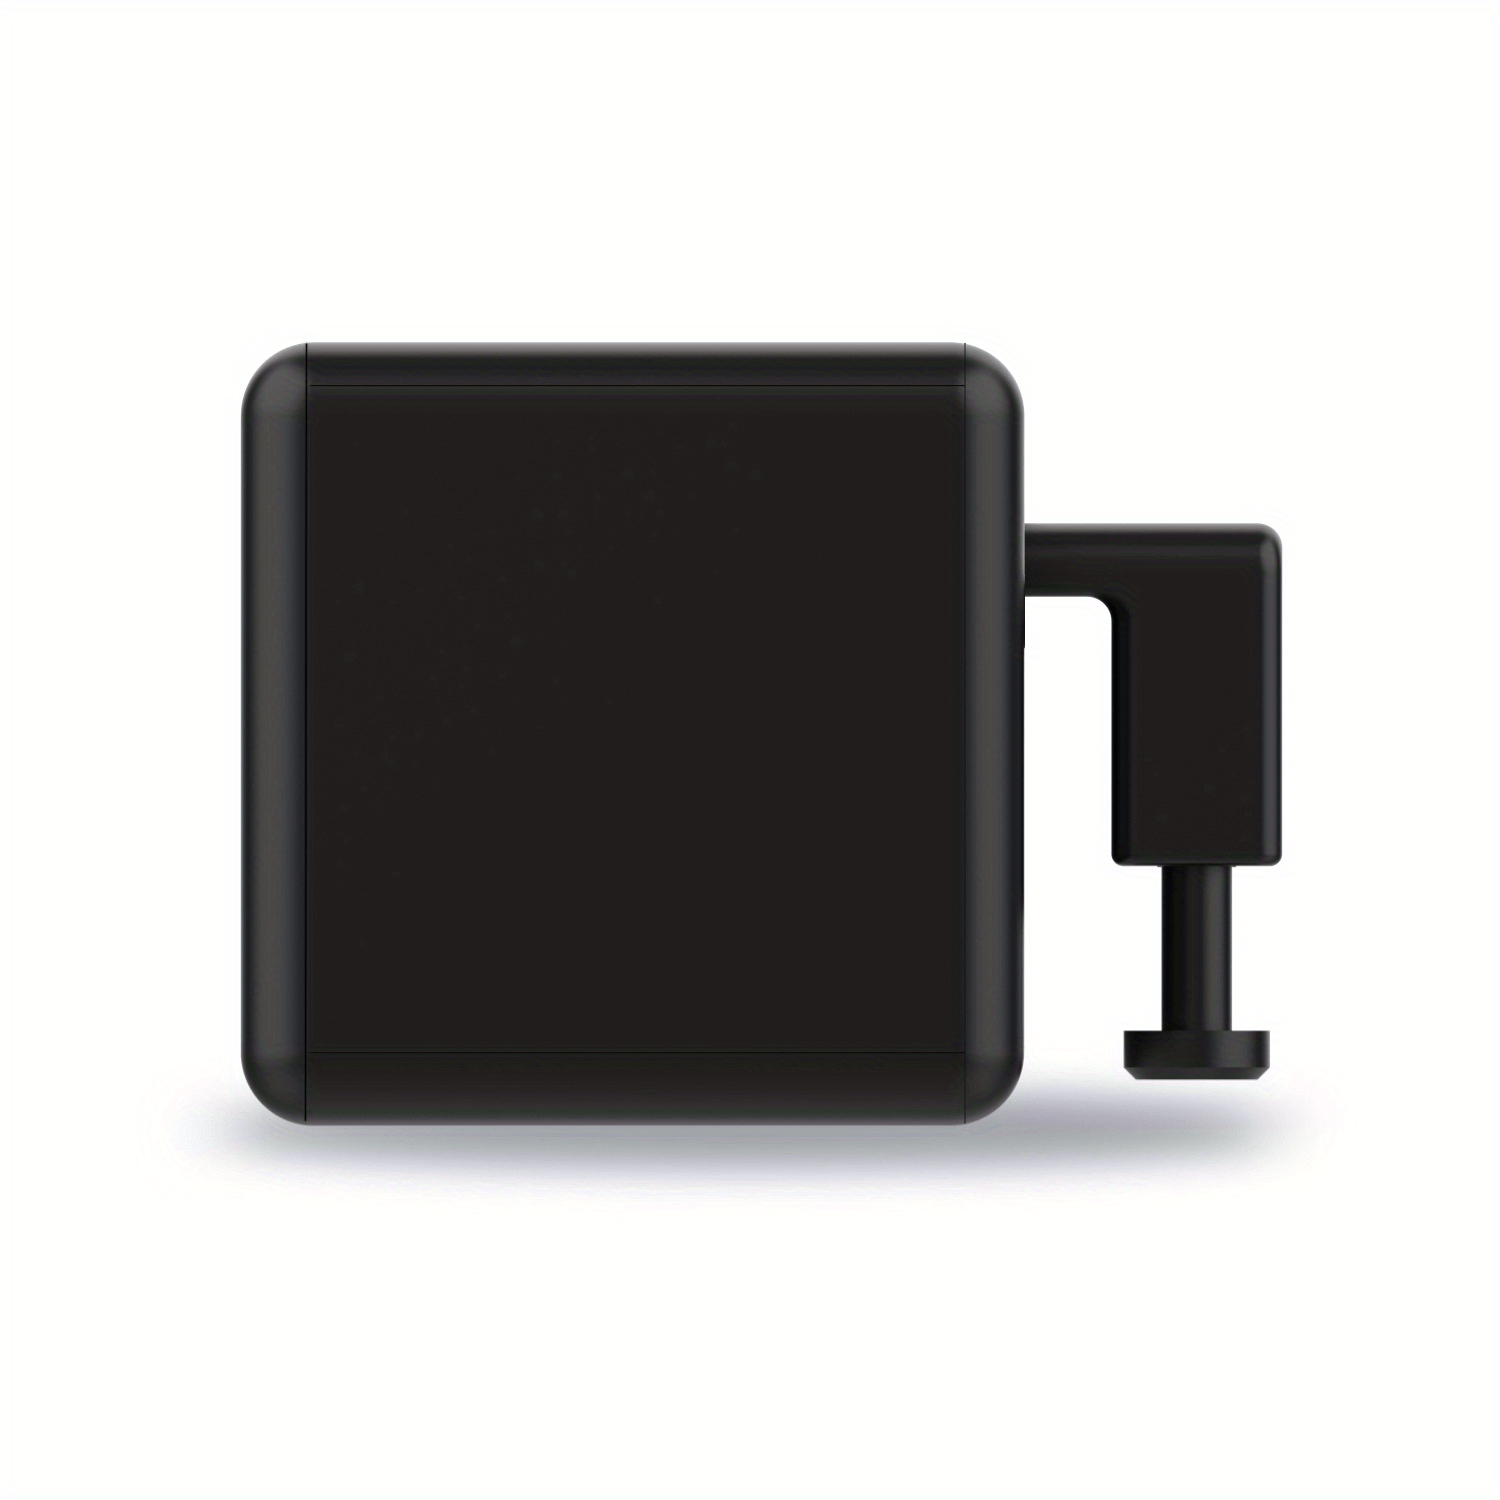 Dimmer Newlab L458MA - Multifunzione (Push Button, WiFi)